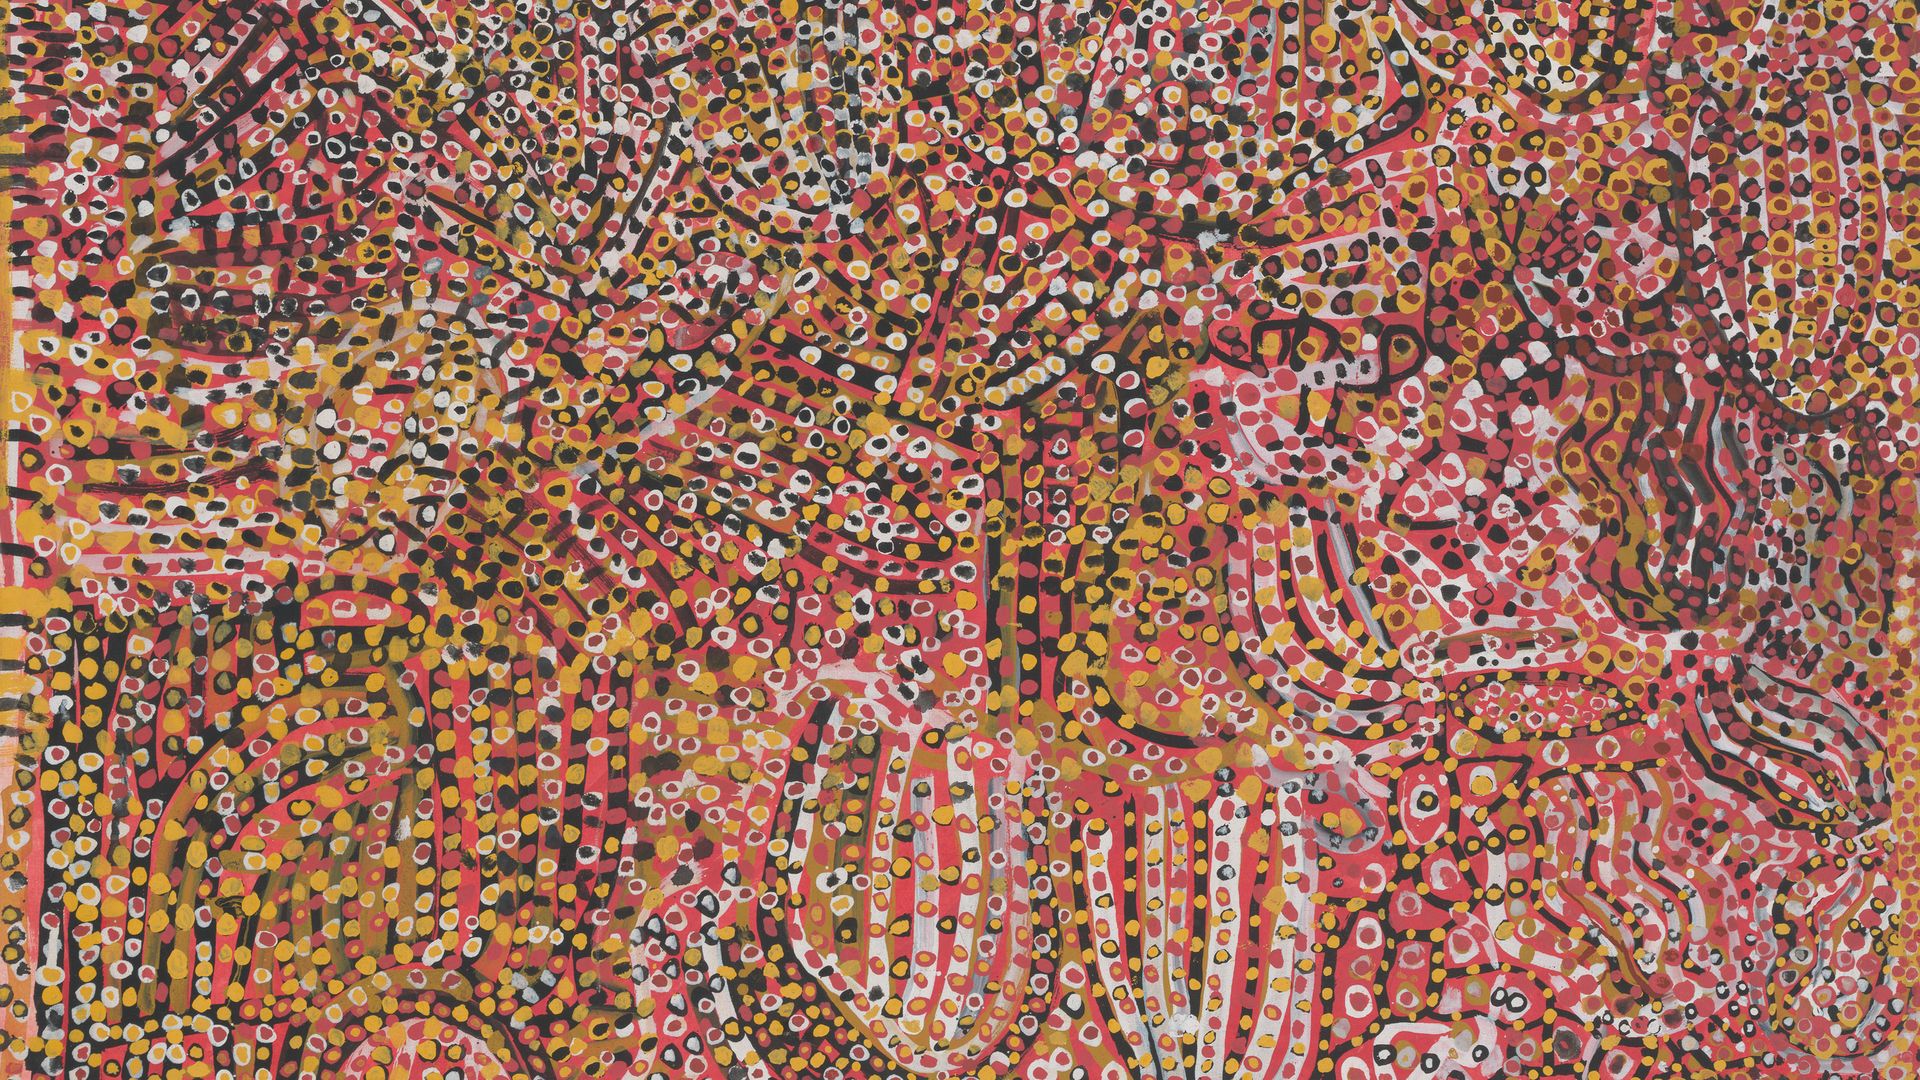 Emily Kame Kngwarreye, Anmatyerre people, Ntange Dreaming, 1989, purchased 1989 © Emily Kame Kngwarreye/Copyright Agency